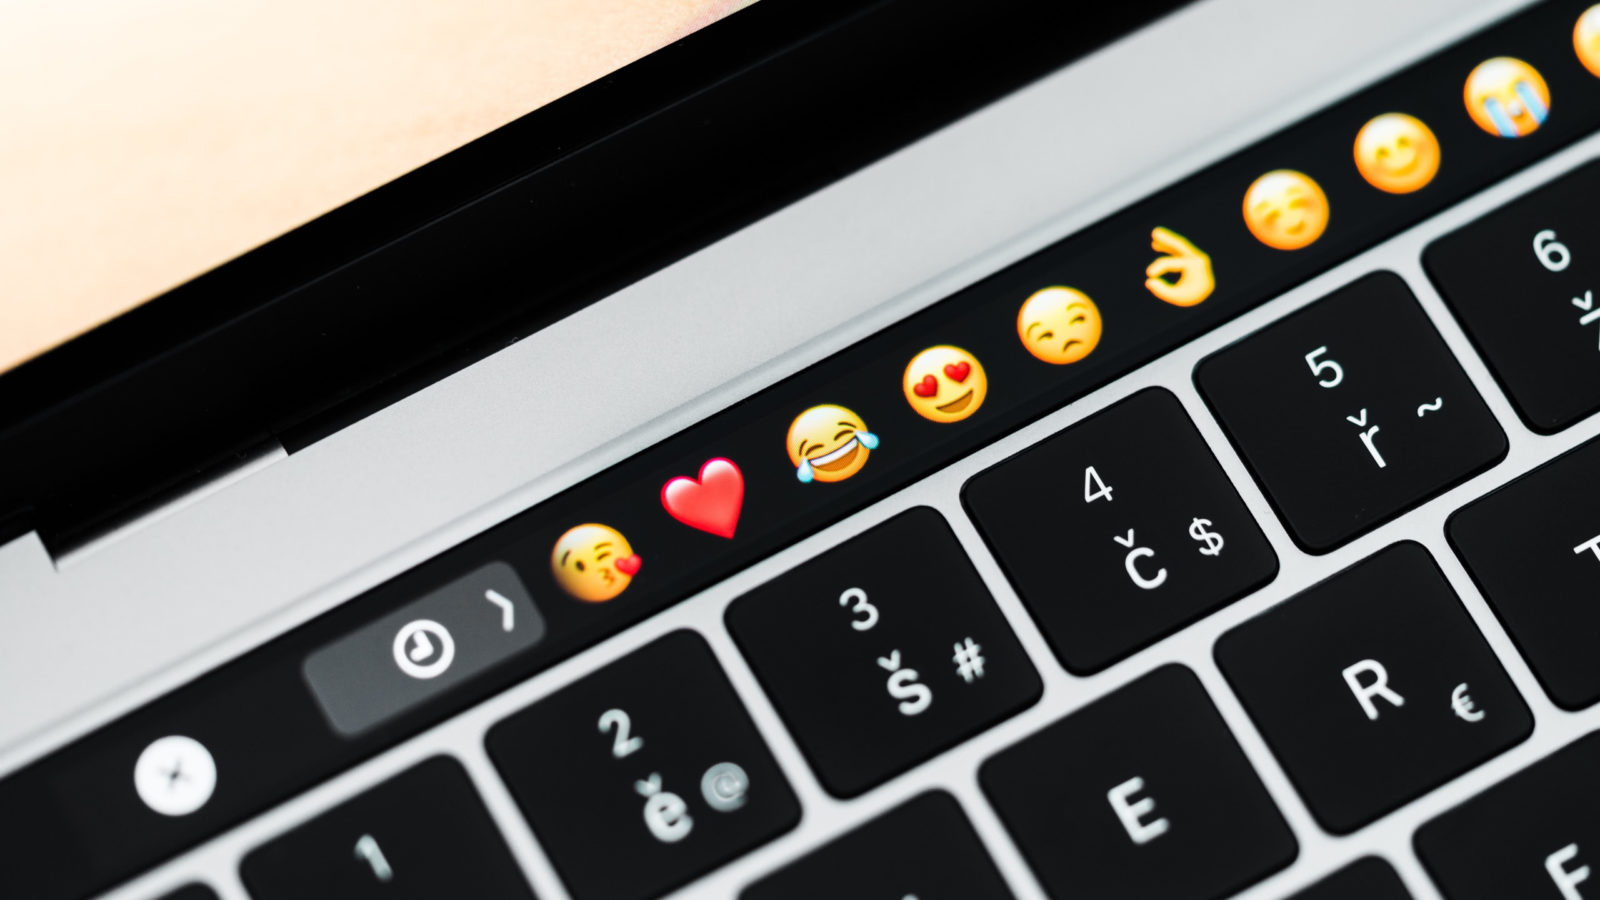 WhatsApp looks to expand responding with emoji very soon